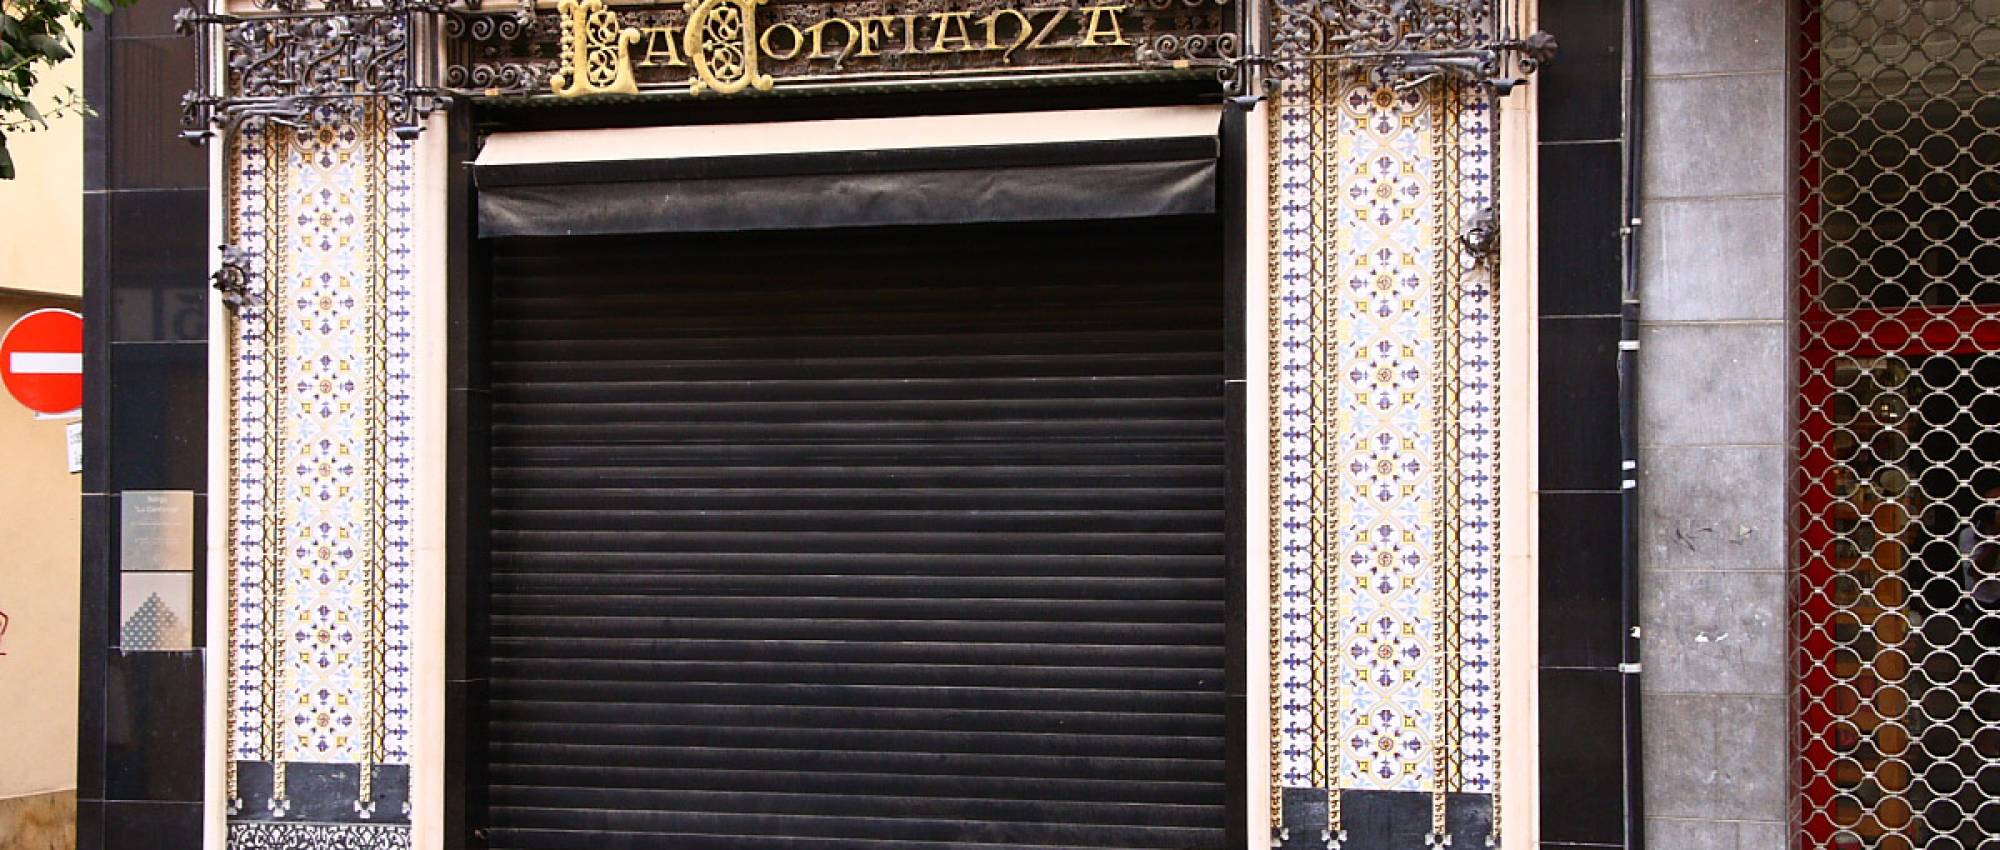 Puerta de la Fideueria La Confiança de Mataró. CC BY 3.0 - amadalvarez / Wikimedia Commons